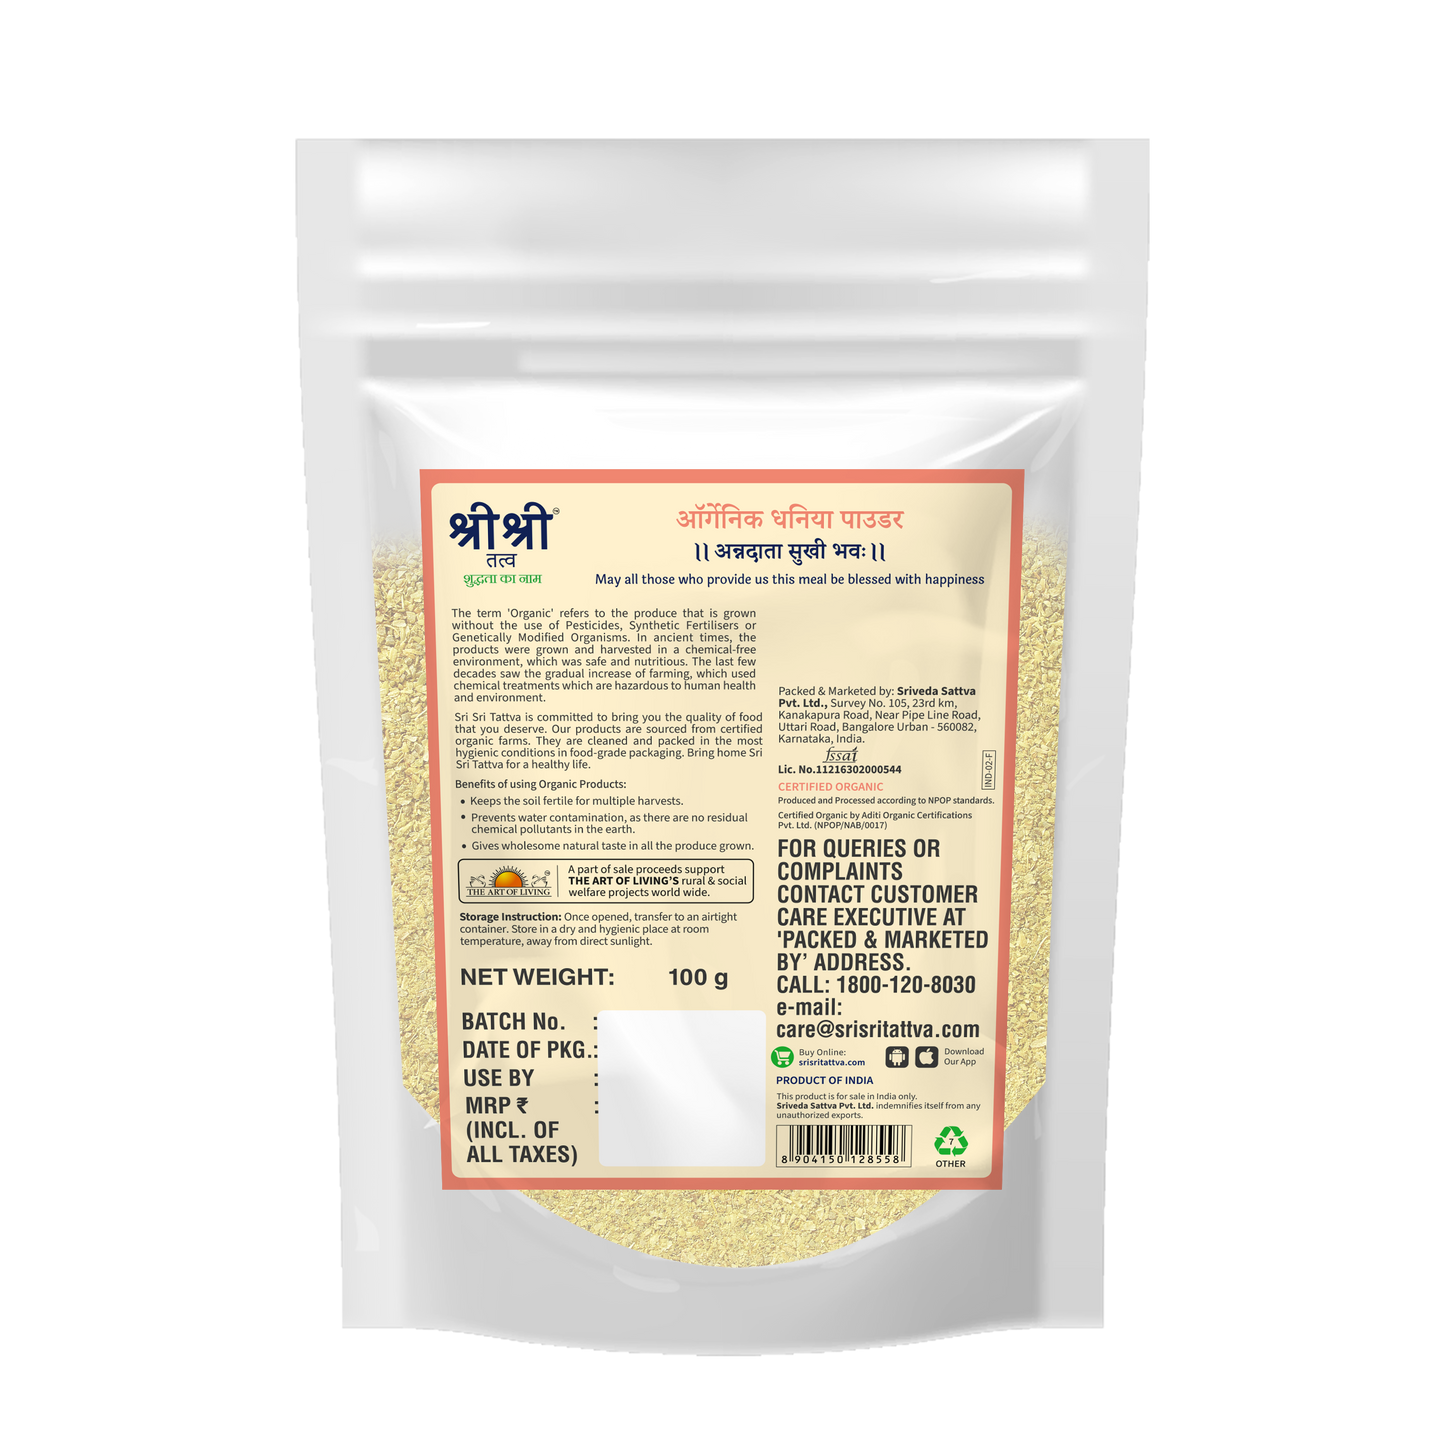 Organic Coriander Powder (Dhania), 100 g